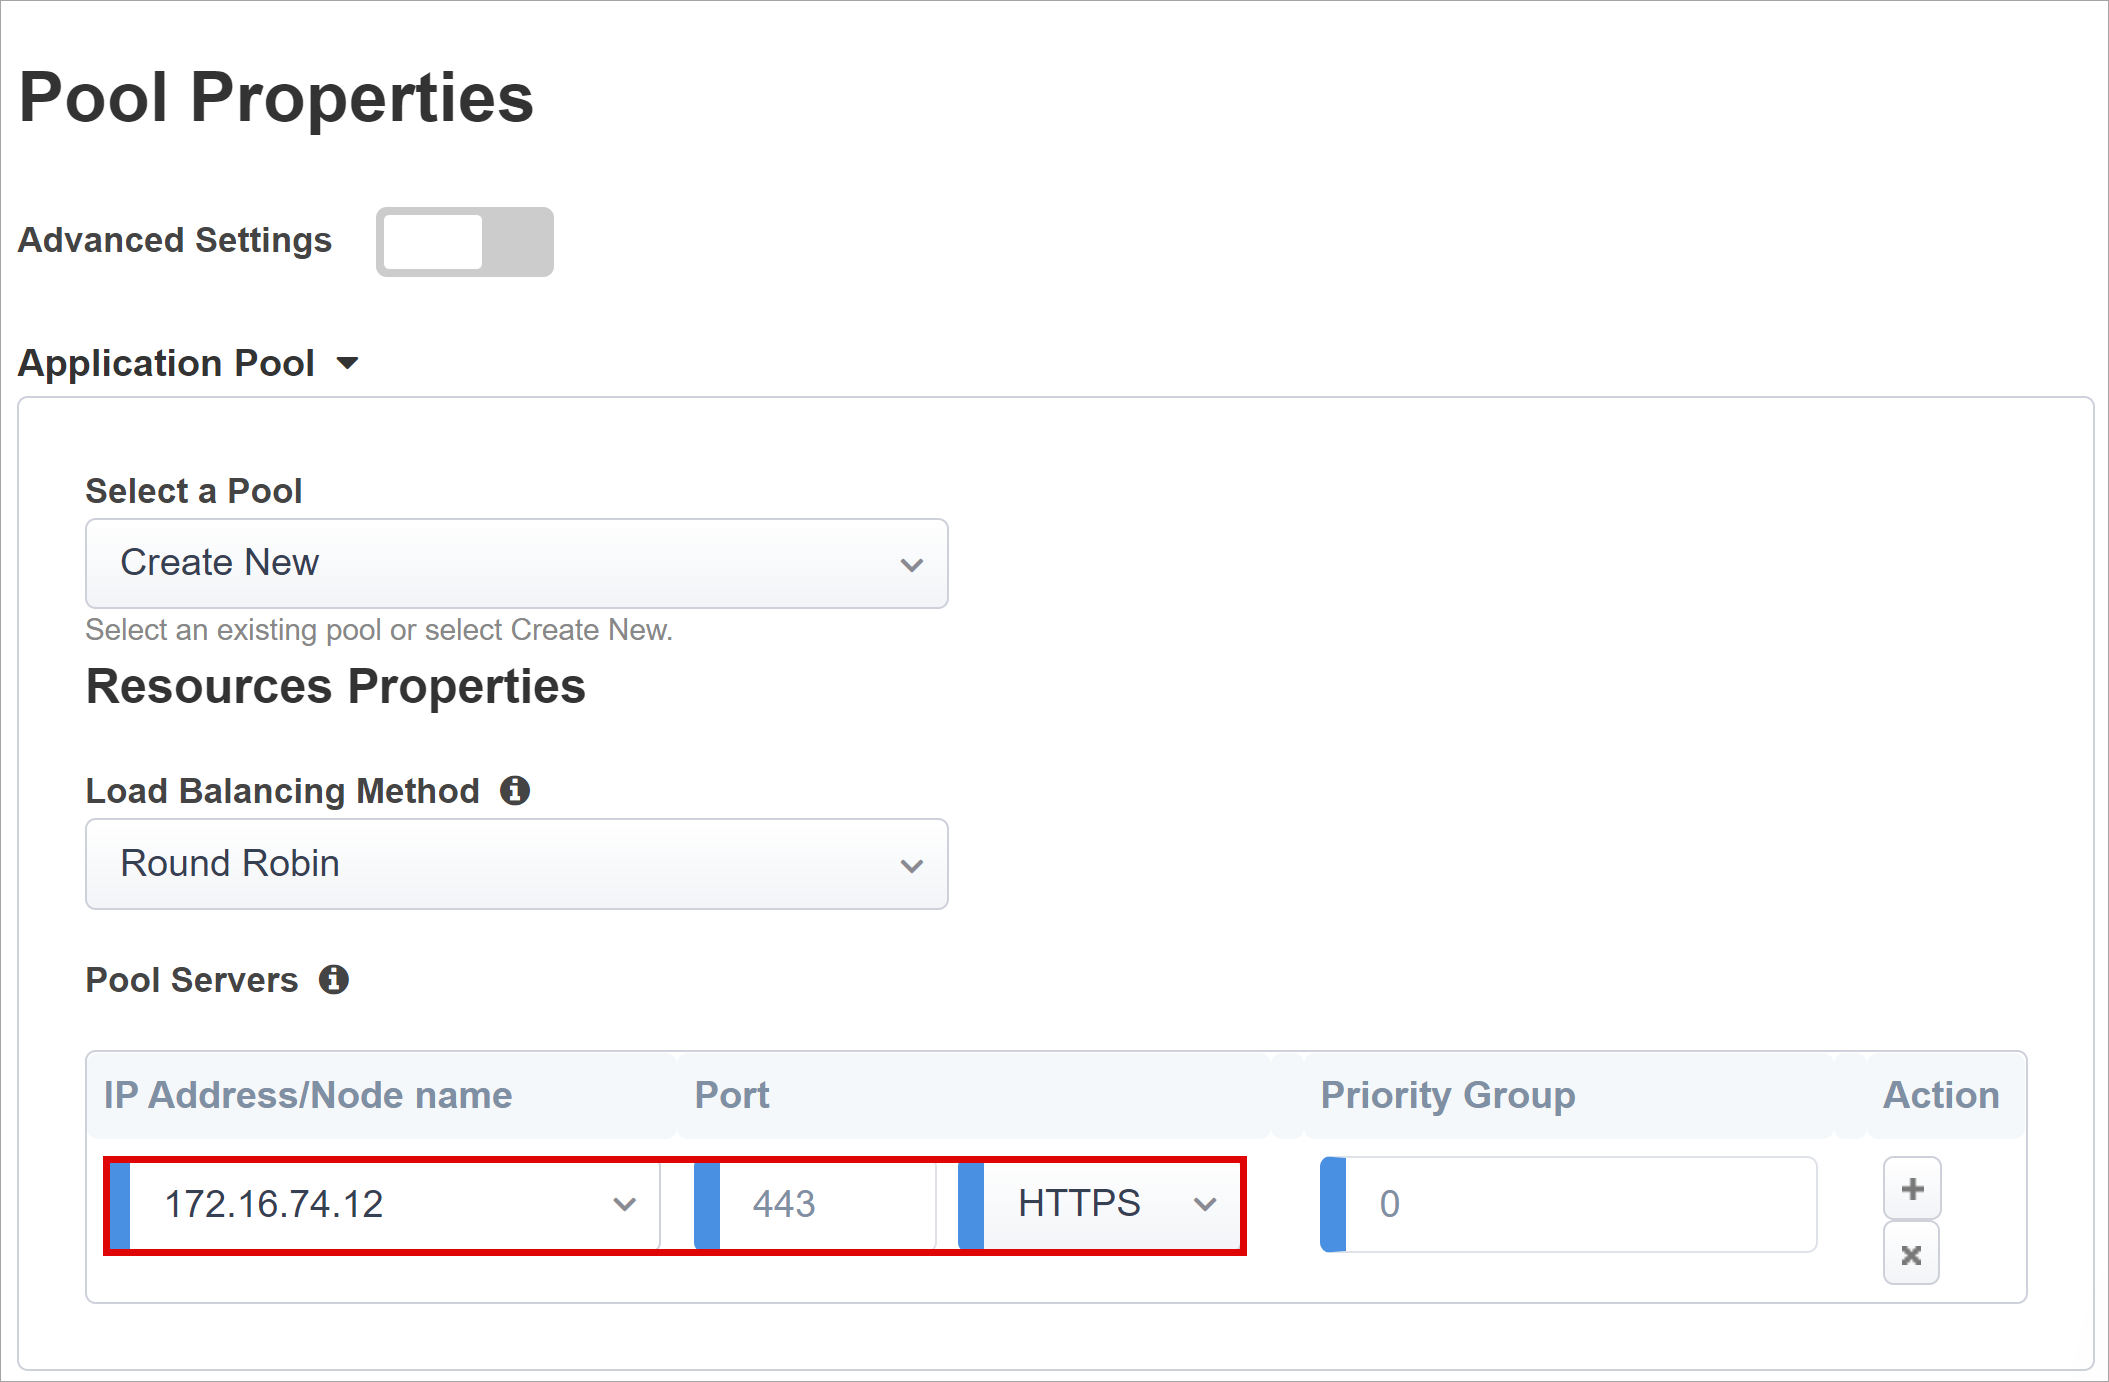 Screenshot of IP Address/Node Name and Port options on Pool Properties.